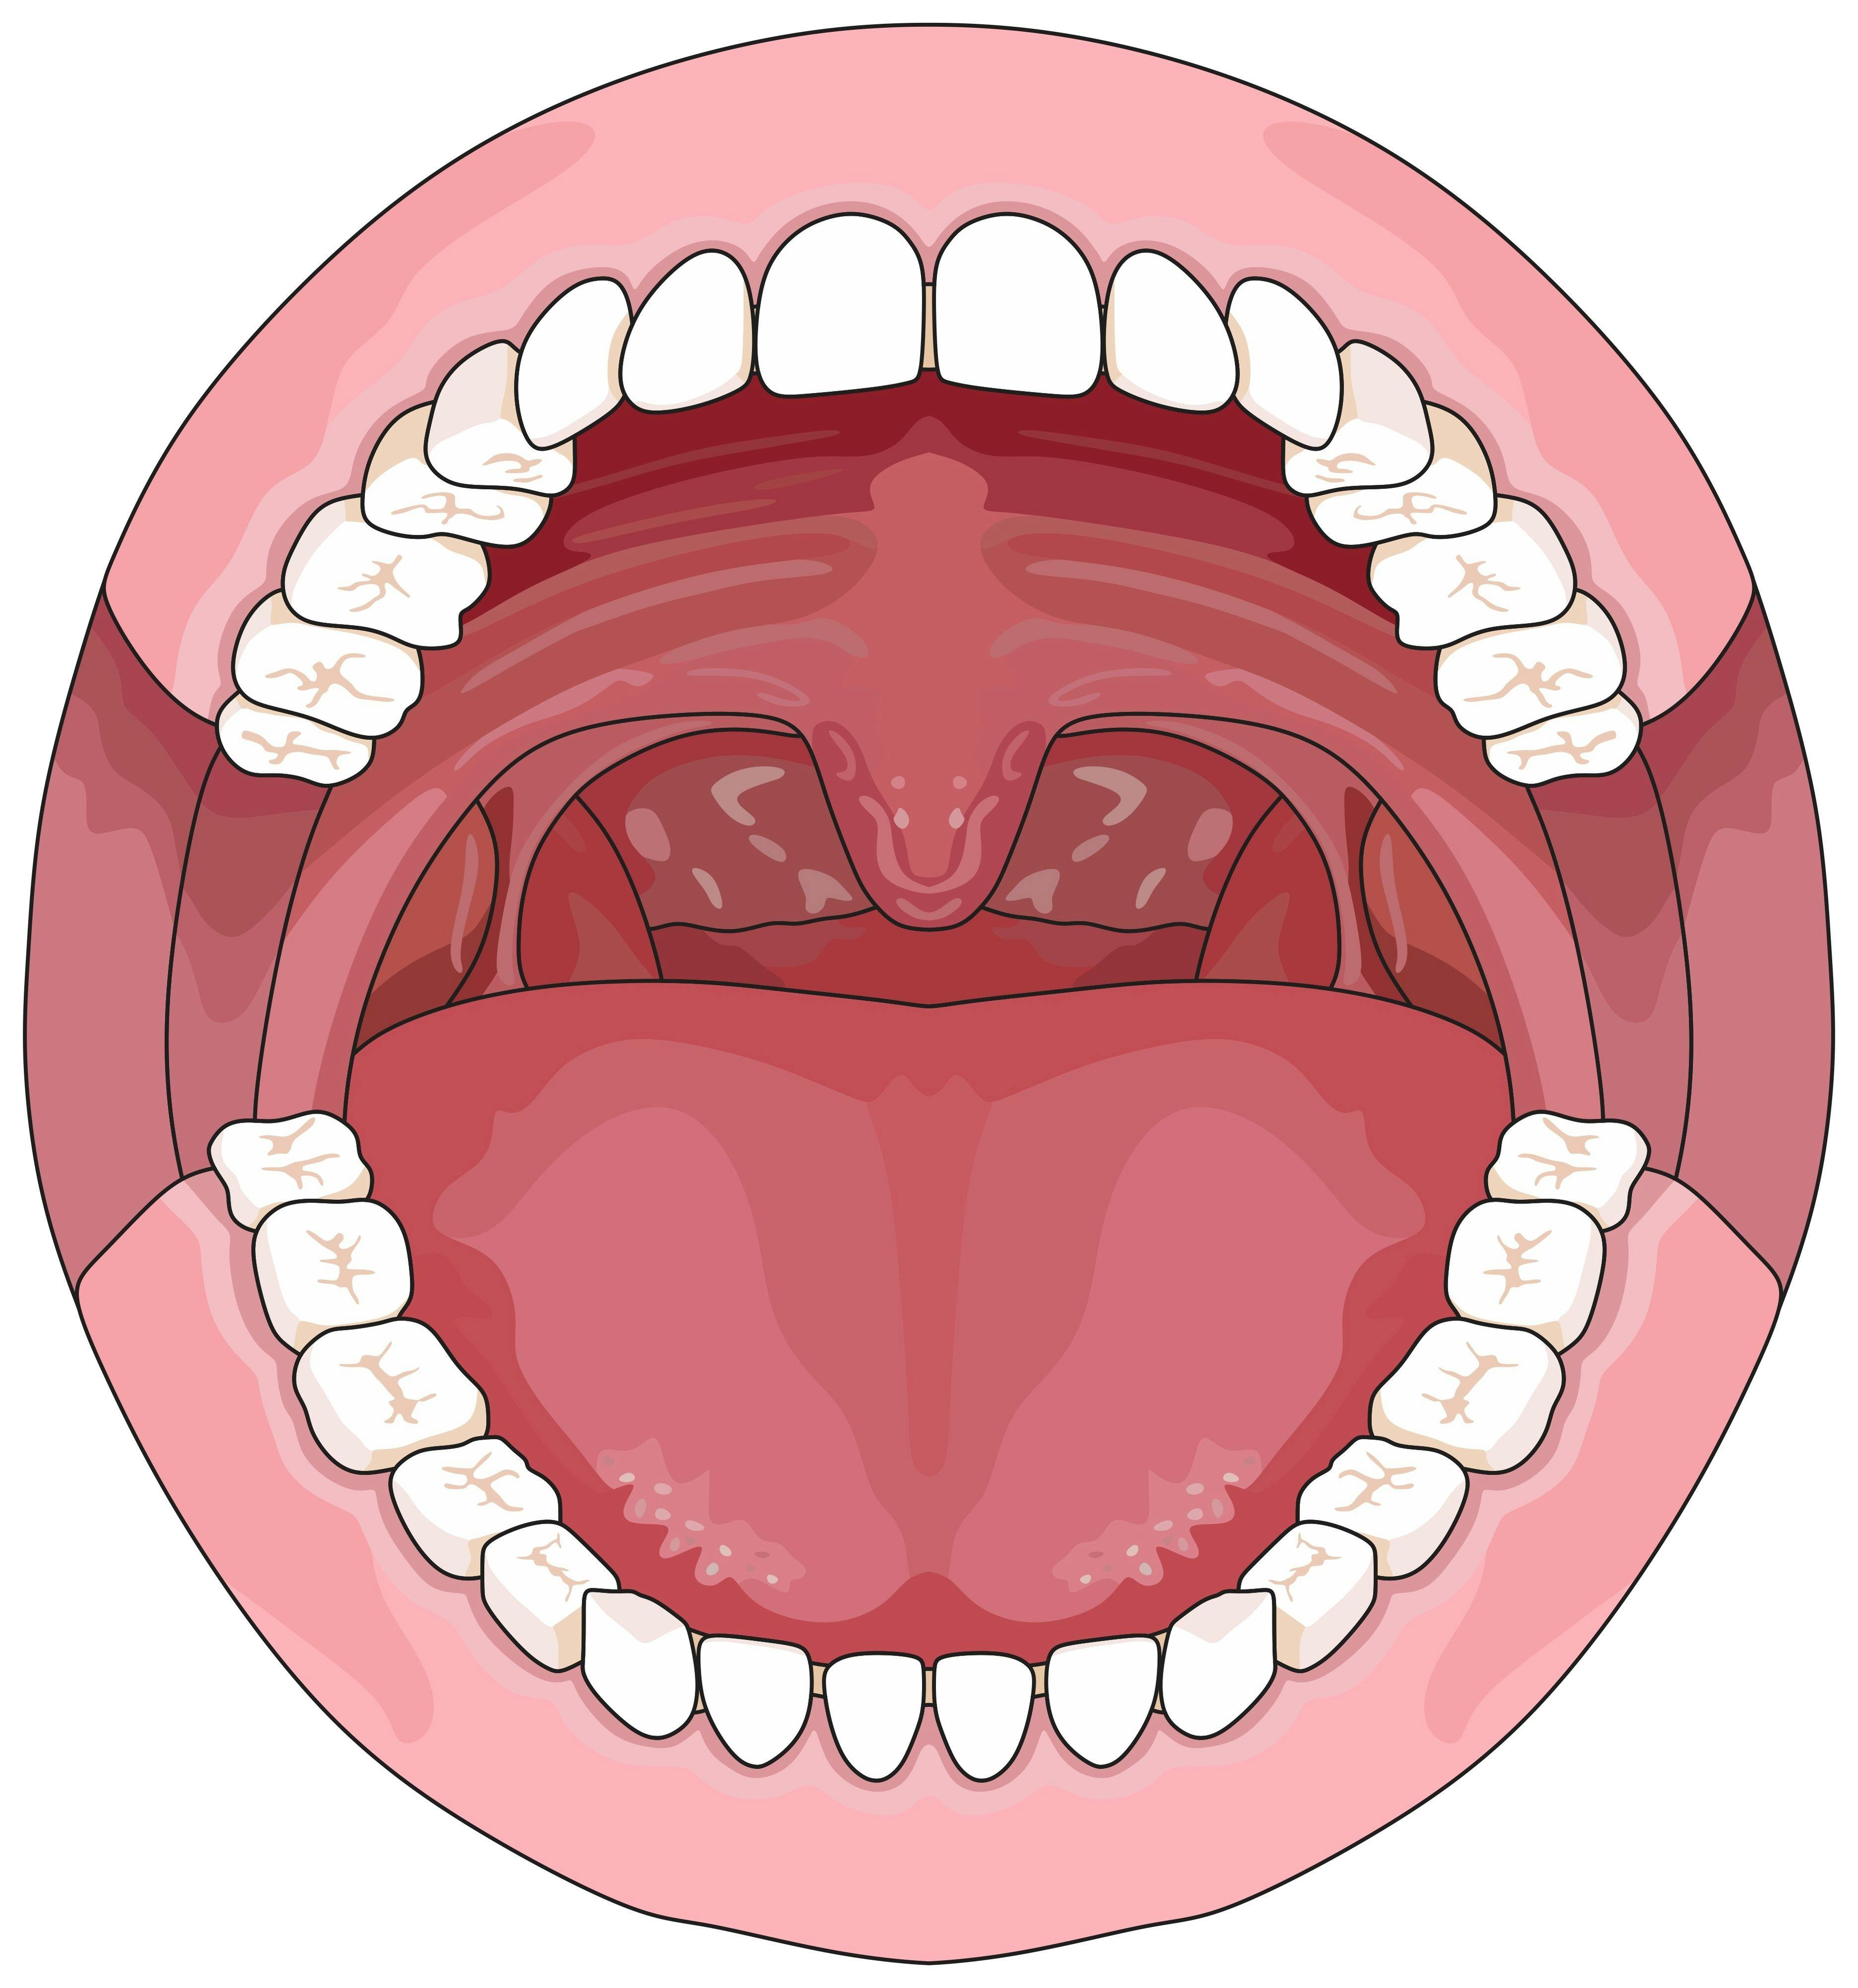 Mouth Illustration | image credit: udaix - stock.adobe.com